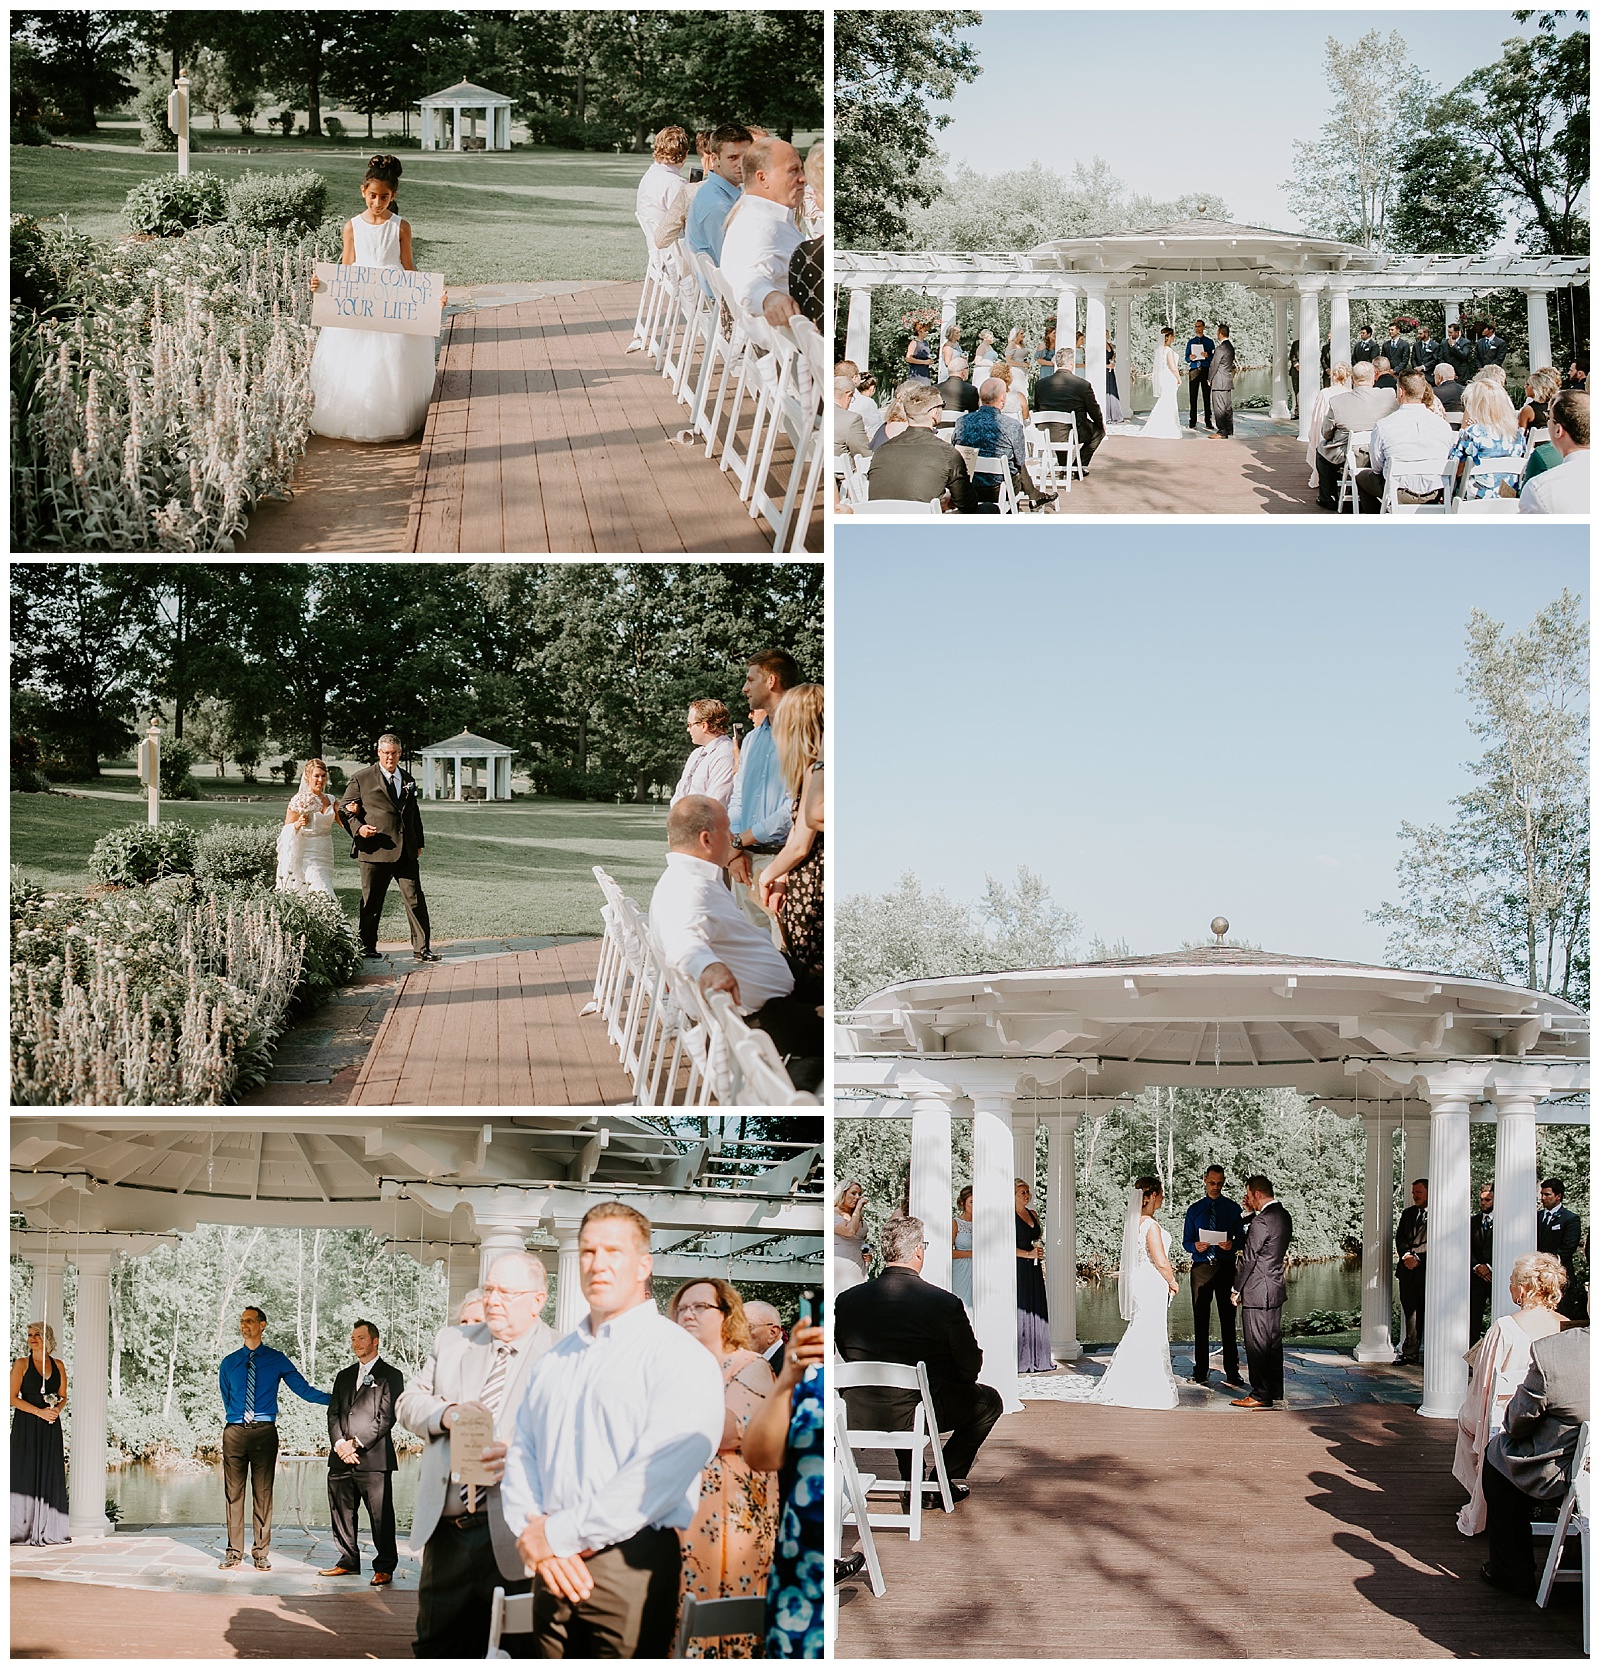 Liv Lyszyk Photography Mid Michigan Photographer Wedding at English Inn in Eaton Rapids, MI